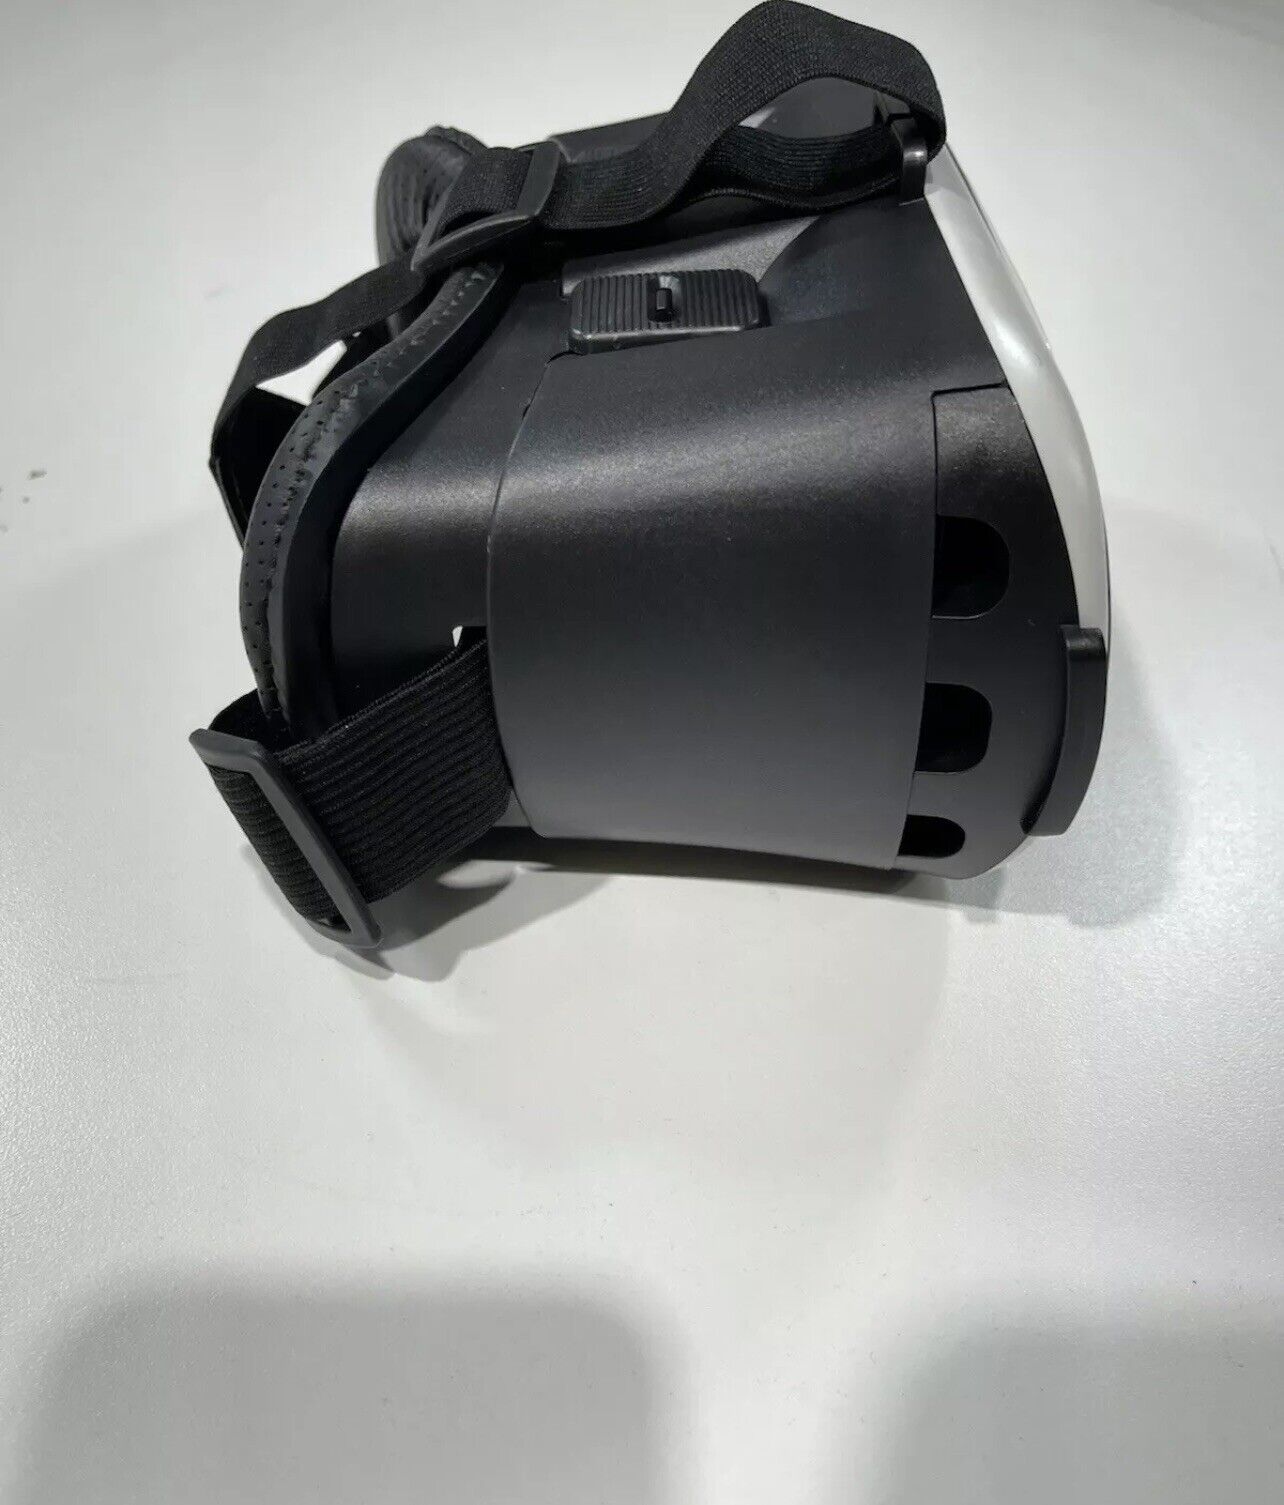 shuffle Markeret Bot American Eagle Virtual Reality VR Headset 360 View Games Movies TV - NOB